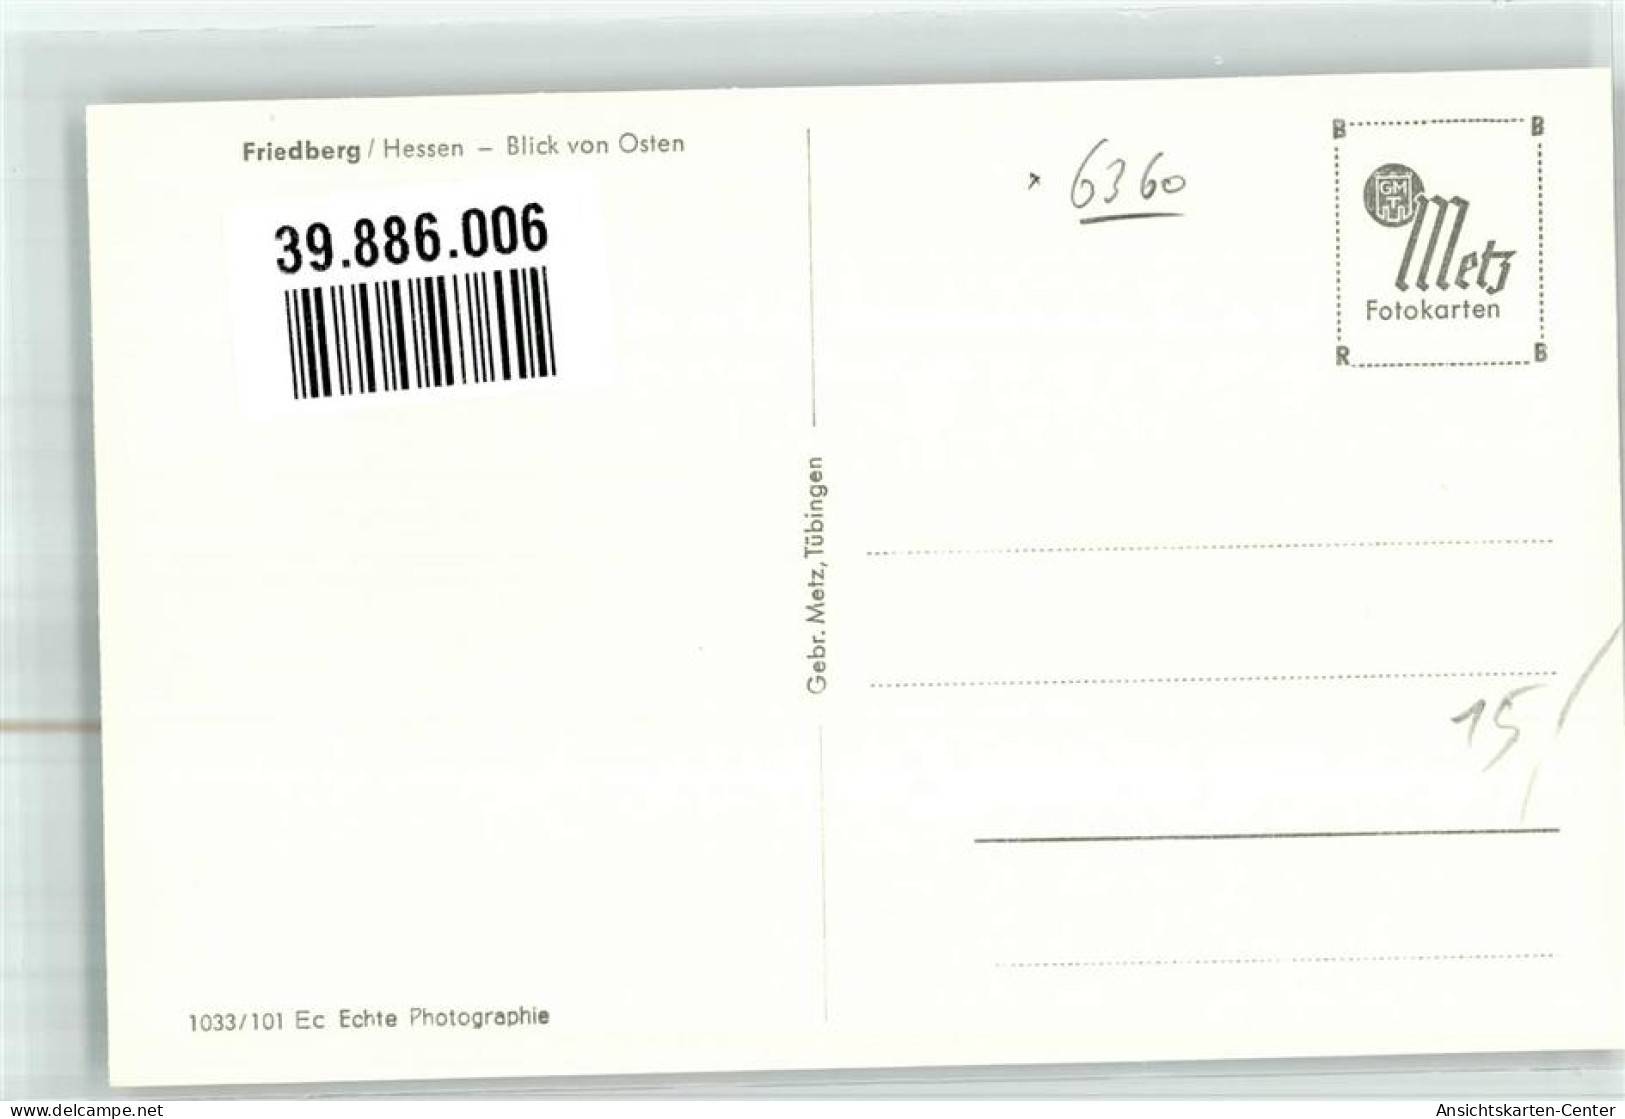 39886006 - Friedberg Hessen - Friedberg